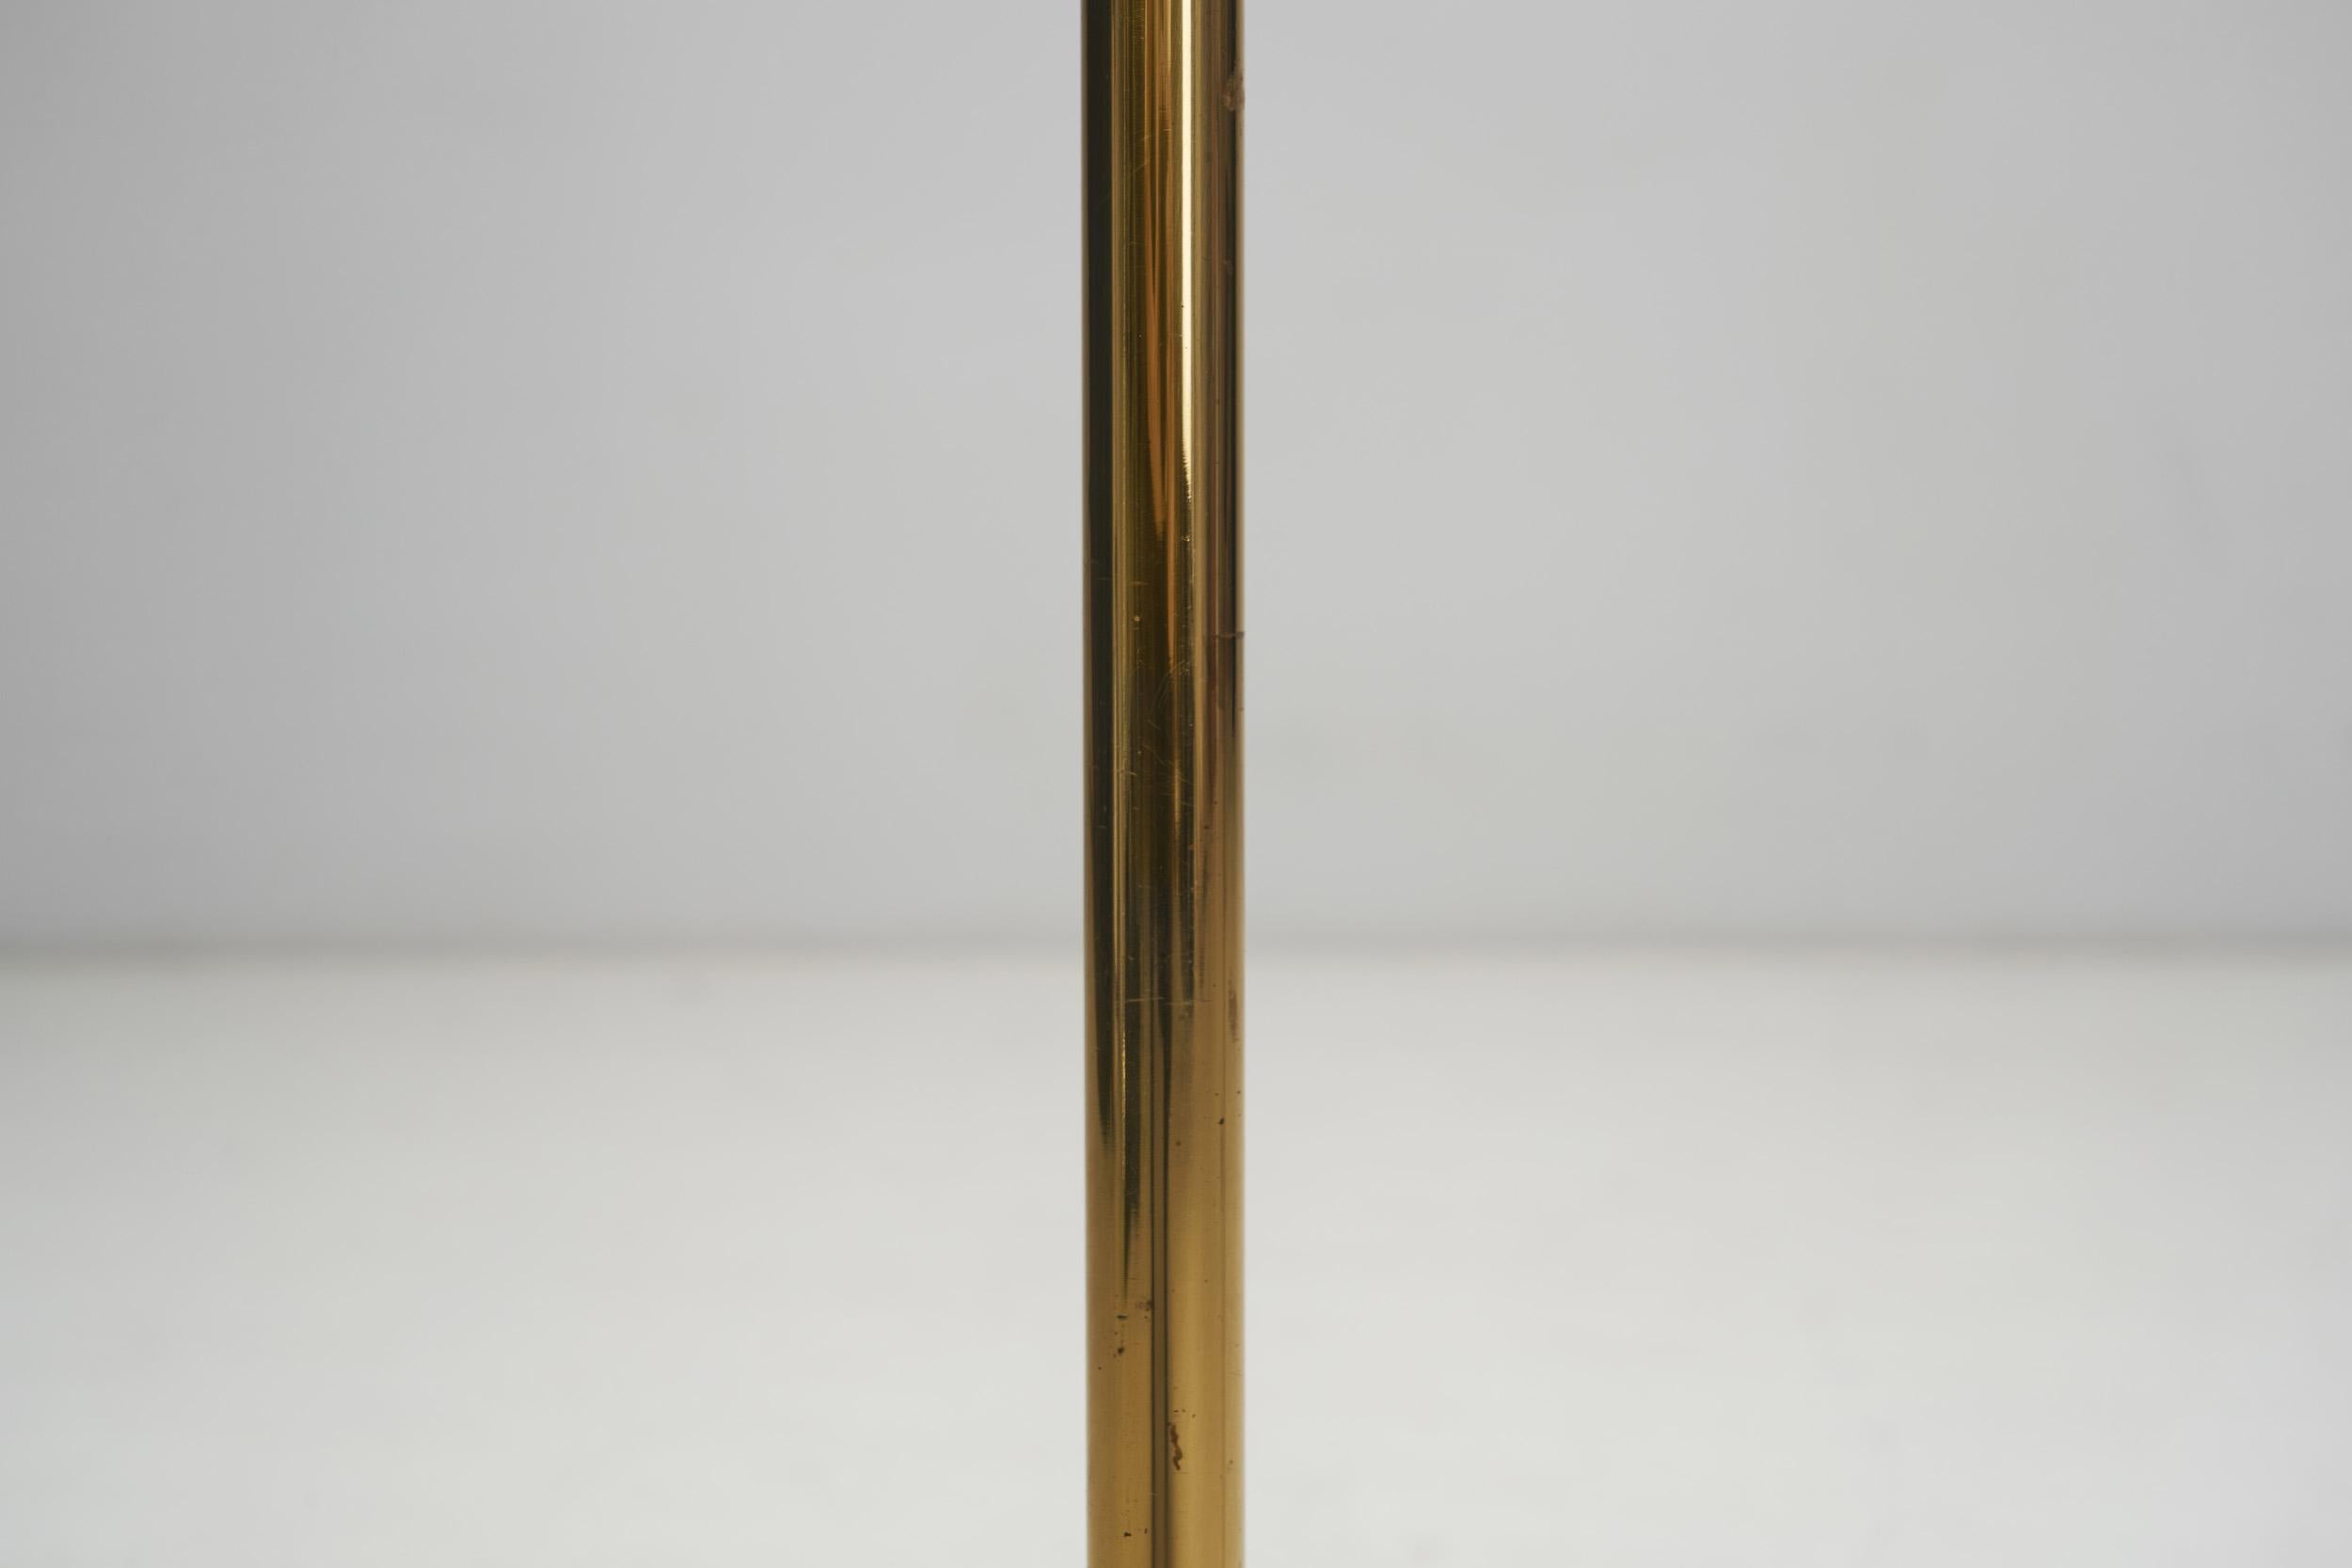 Jan Wickelgren Curved Brass Floor Lamp for Aneta Belysning AB, Sweden 1970s For Sale 8